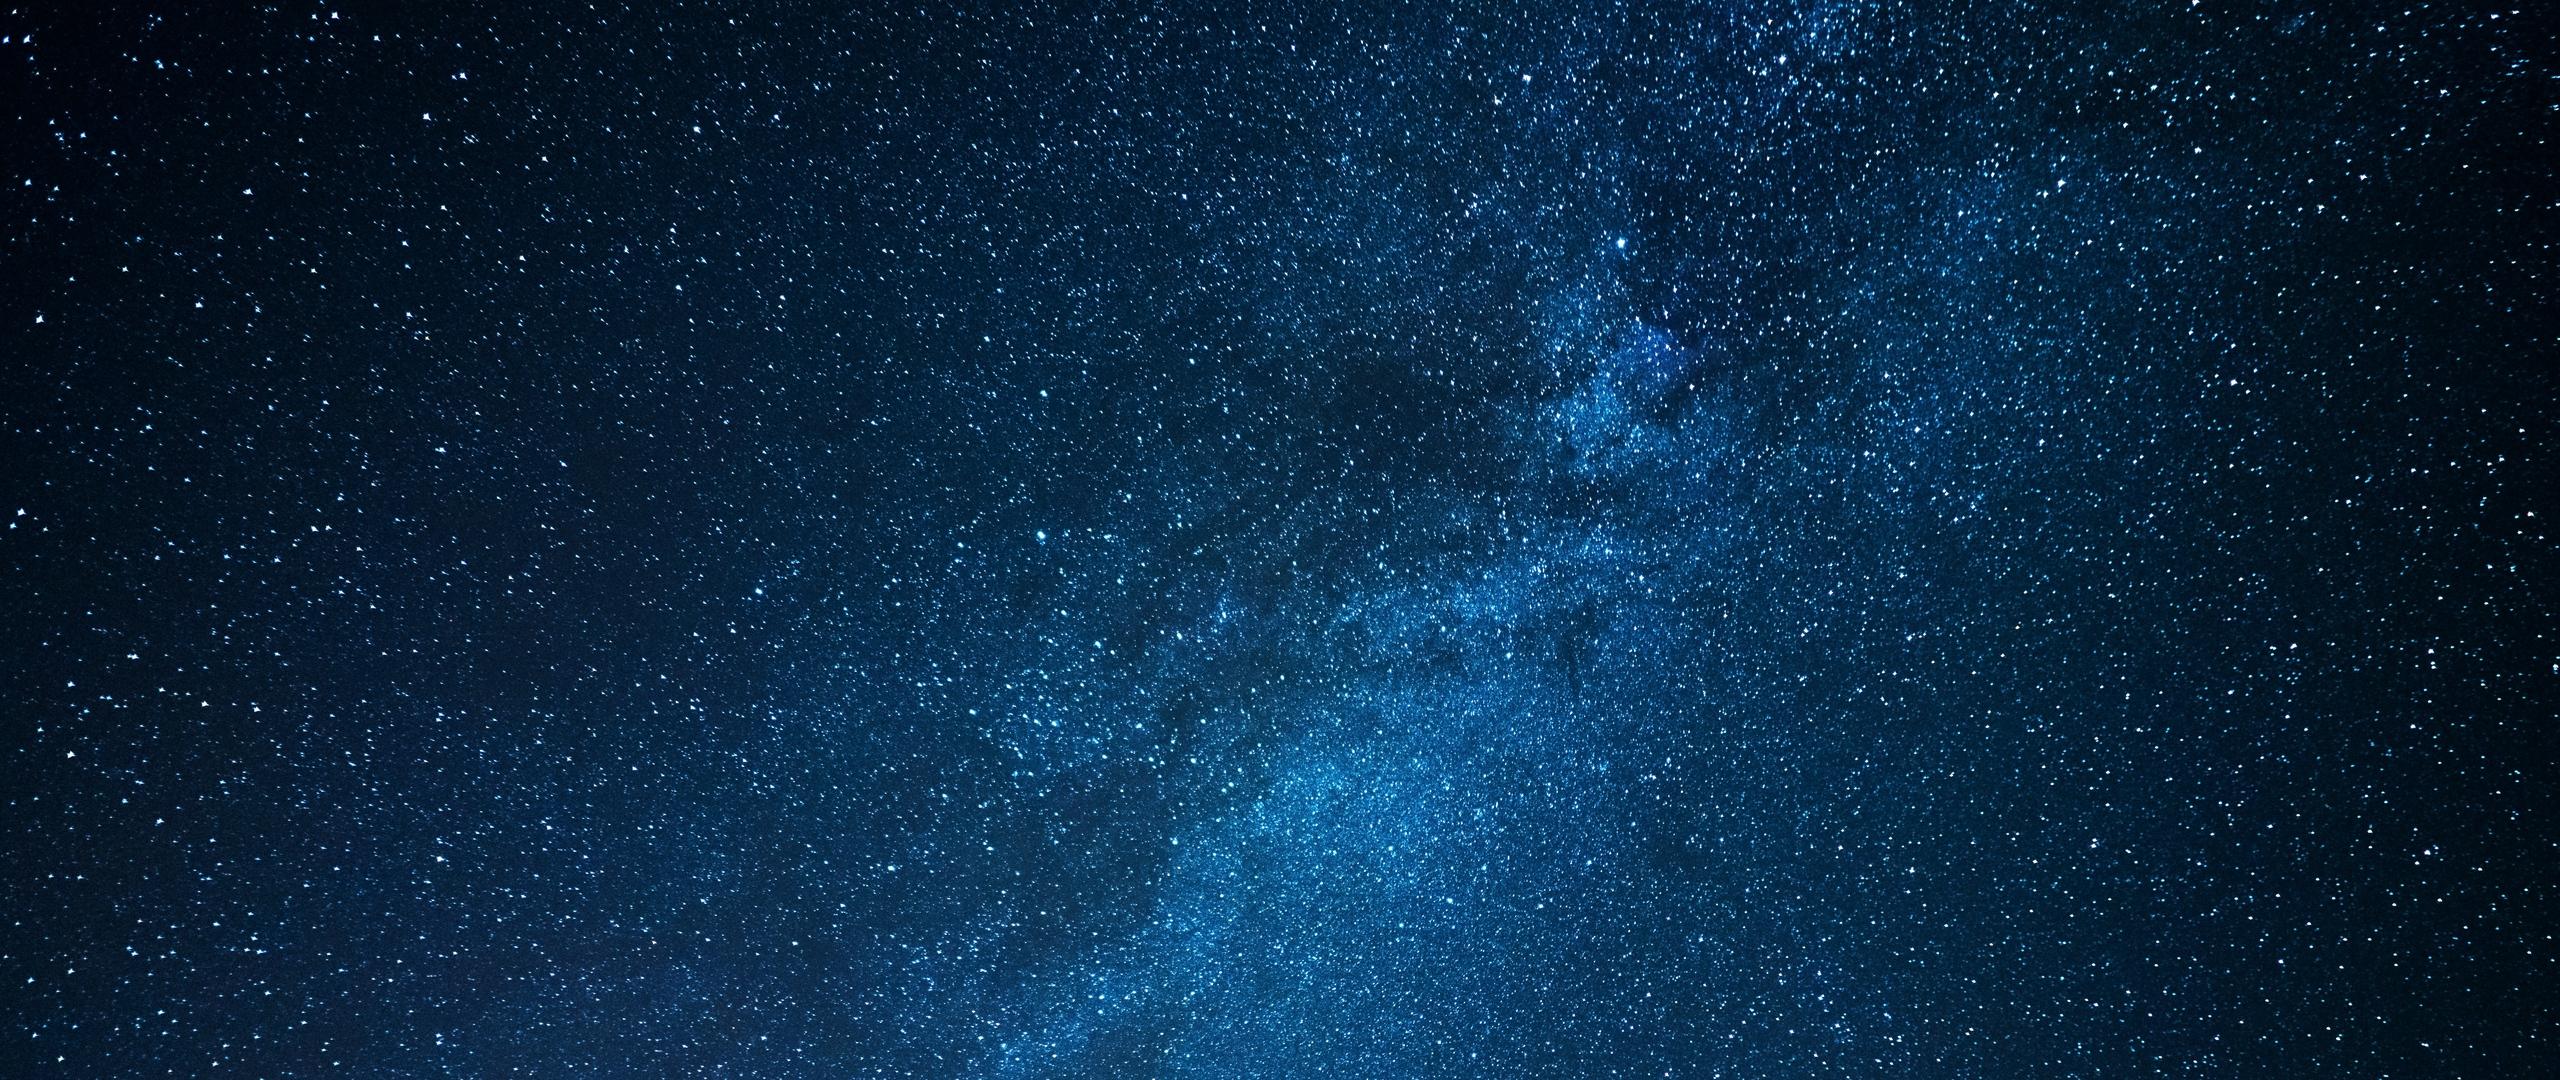 Galaxy 1080p desktop background milky way night sky wallpaper hd